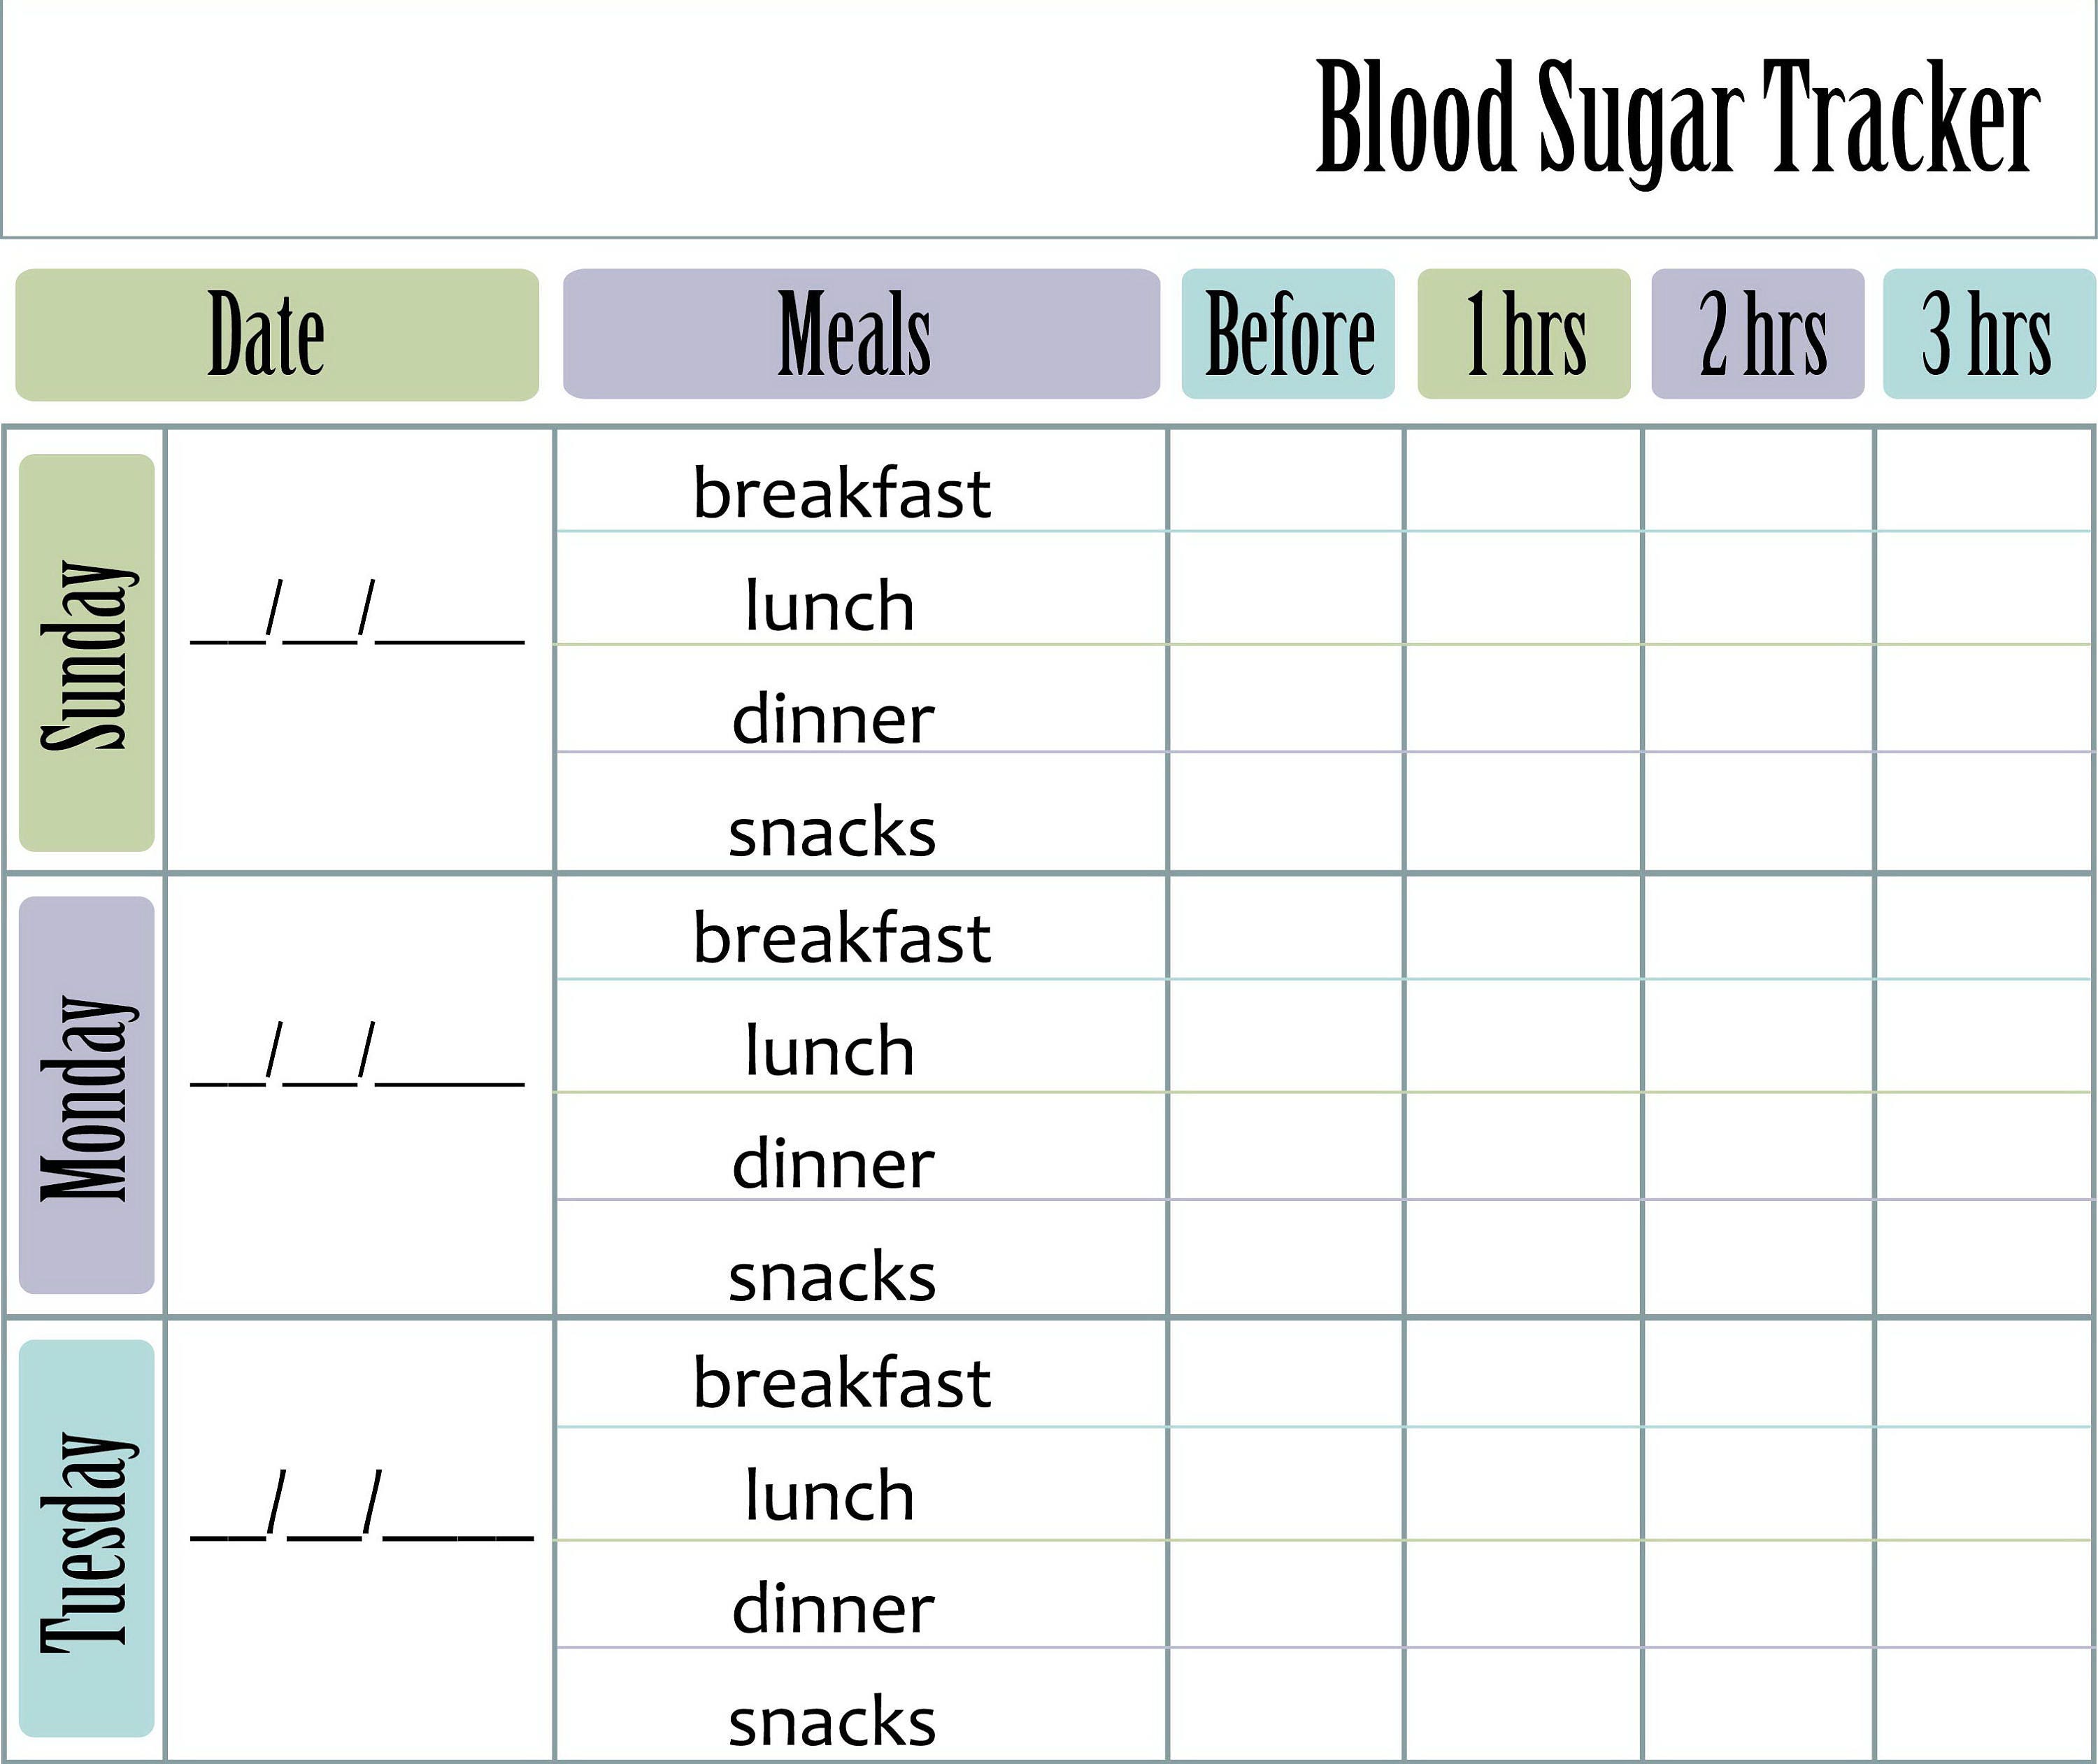 blood-sugar-tracker-printable-blood-glucose-log-a5-planner